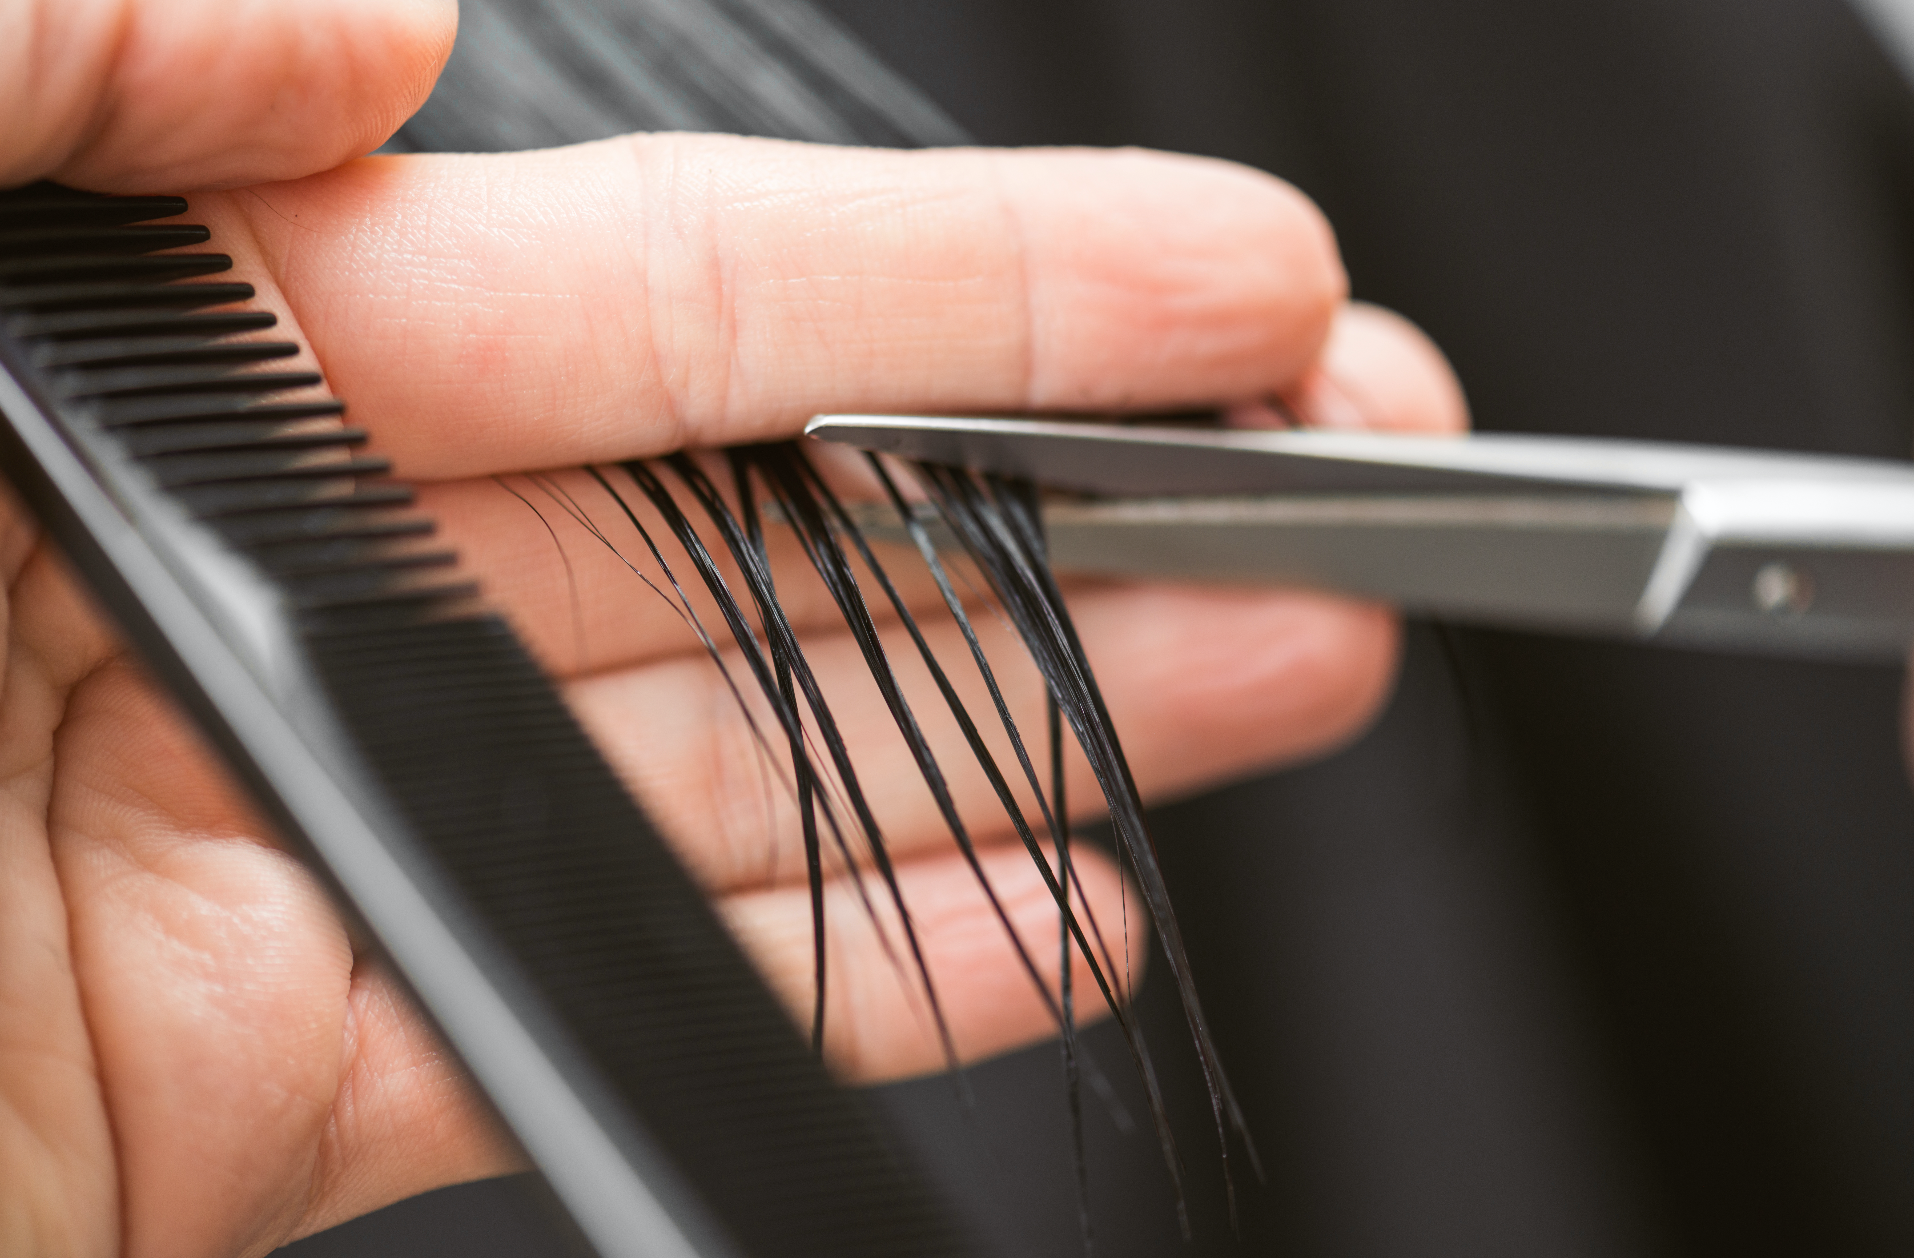 Close-up of scissors cutting hair